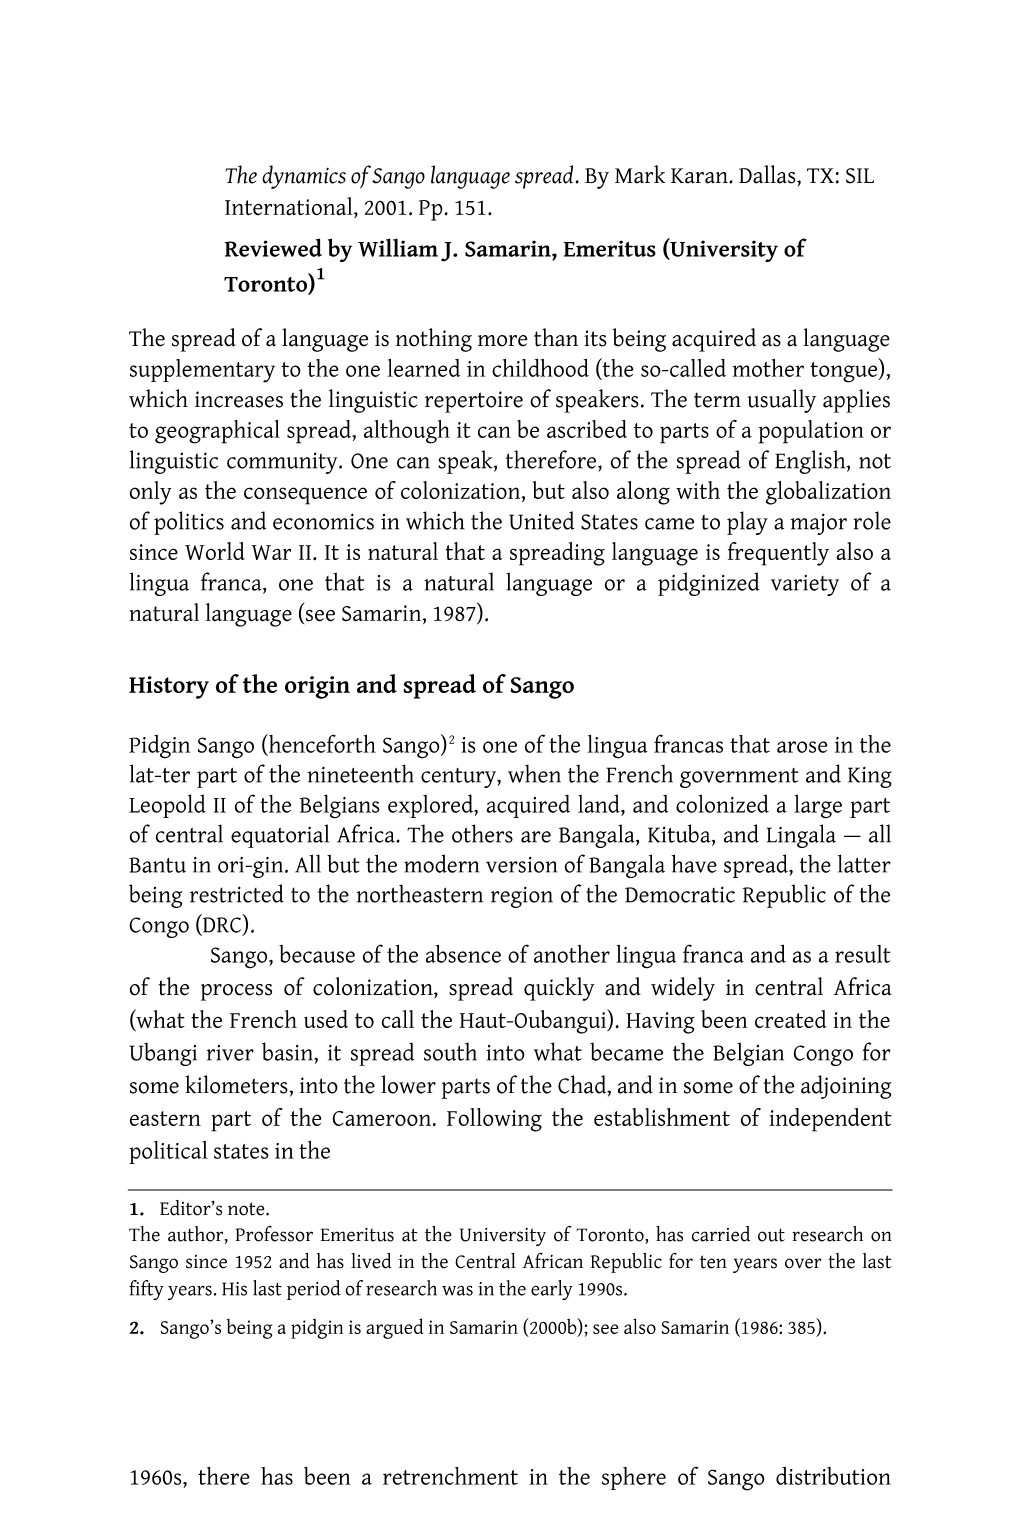 The Dynamics of Sango Language Spread. by Mark Karan. Dallas, TX: SIL International, 2001